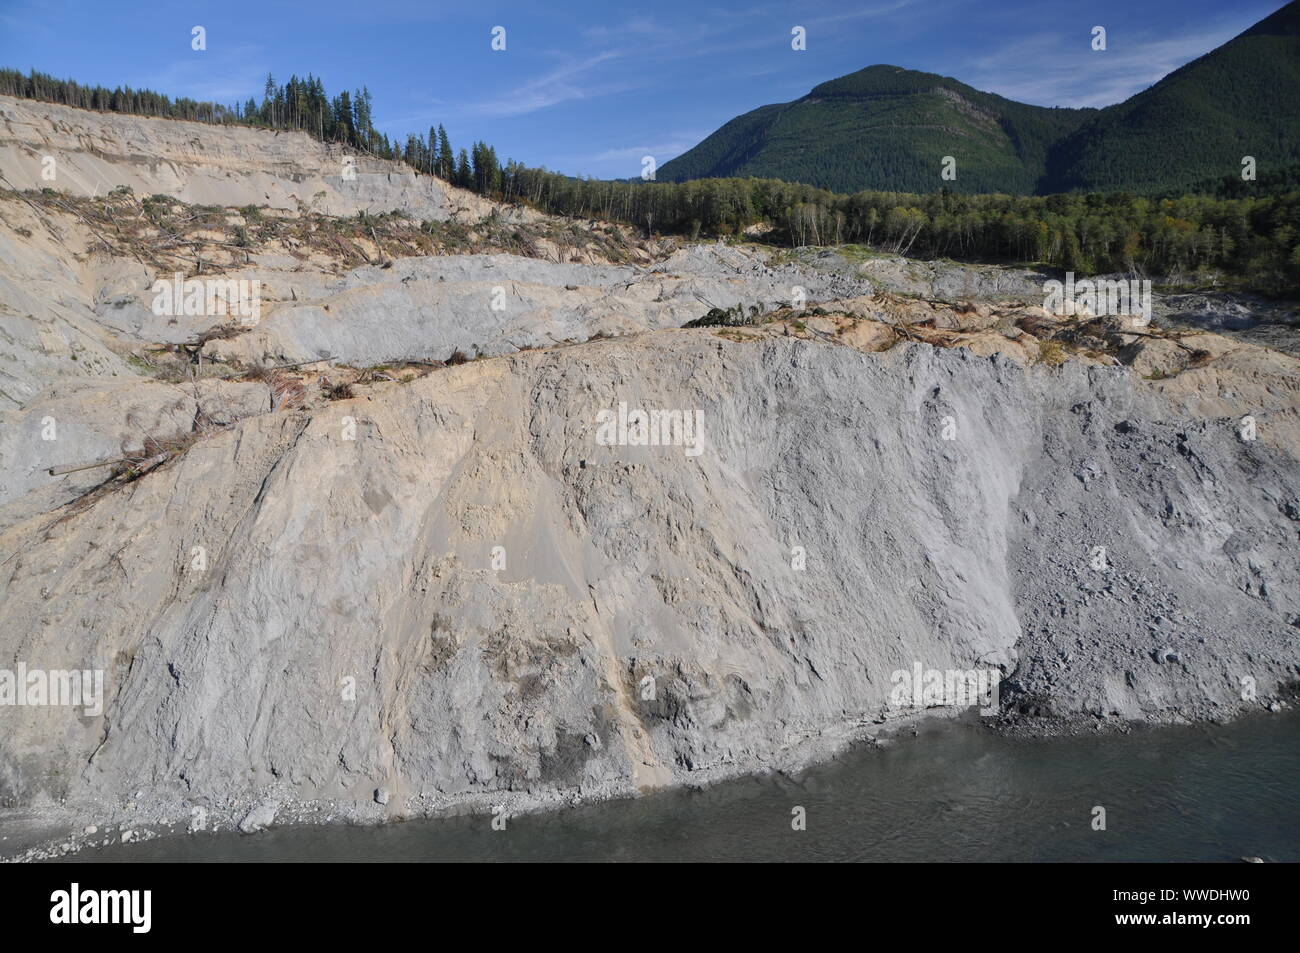 2014 Oso Landslide, Oso Landslide, North Fork Stillaguamish River Valley, Snohomish County, Washington, USA Stock Photo